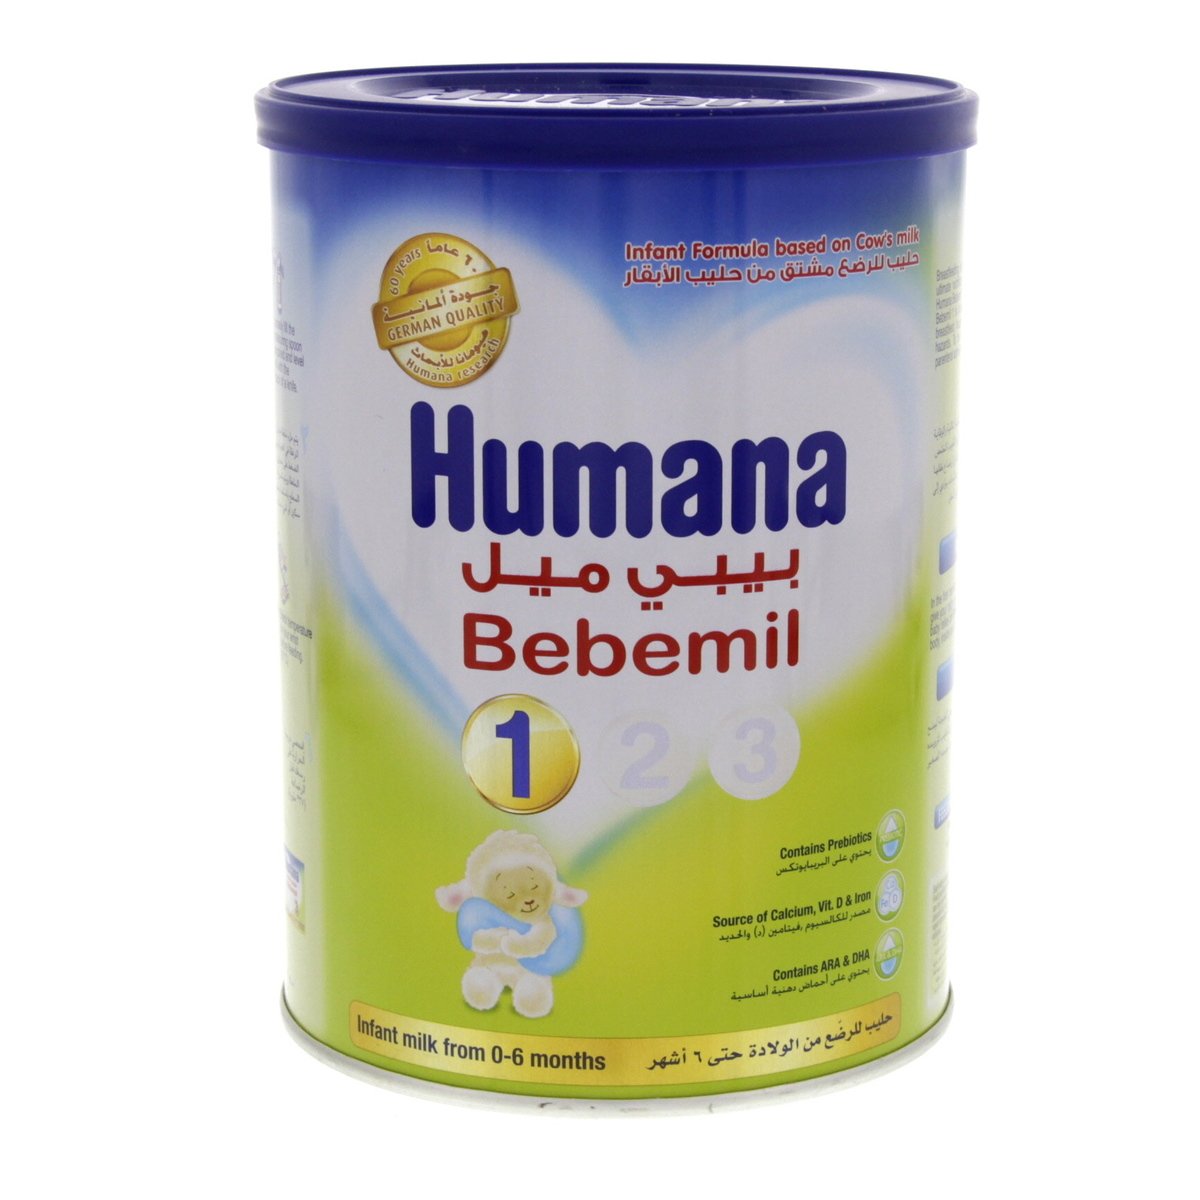 Humana Bebemil Stage 1 Infant Milk Formula From 0-6 Months 400 g